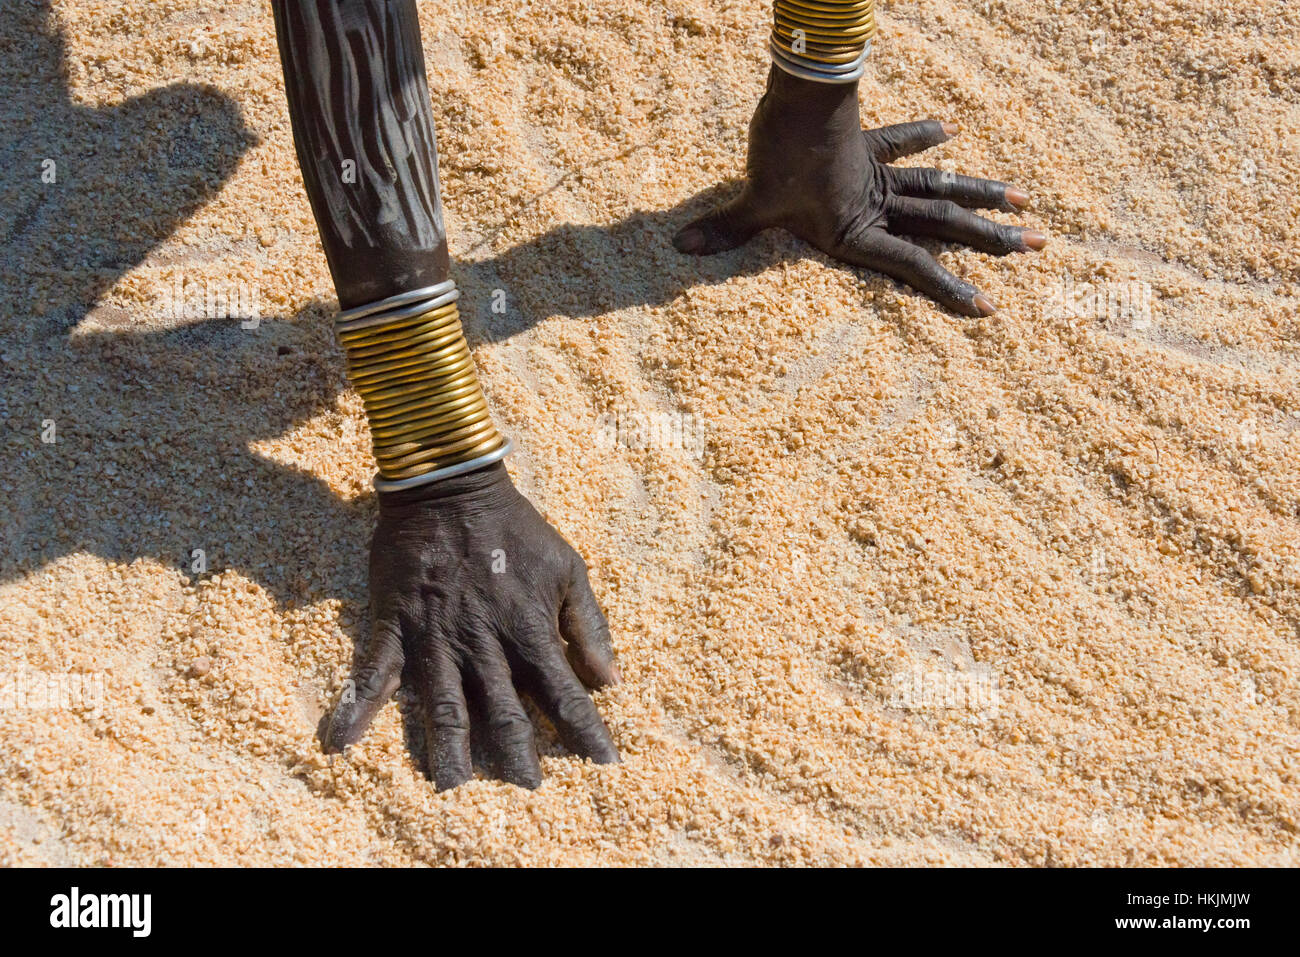 Mursi tribe people in traditional clothing wearing bracelets, Mursi Village, South Omo, Ethiopia Stock Photo